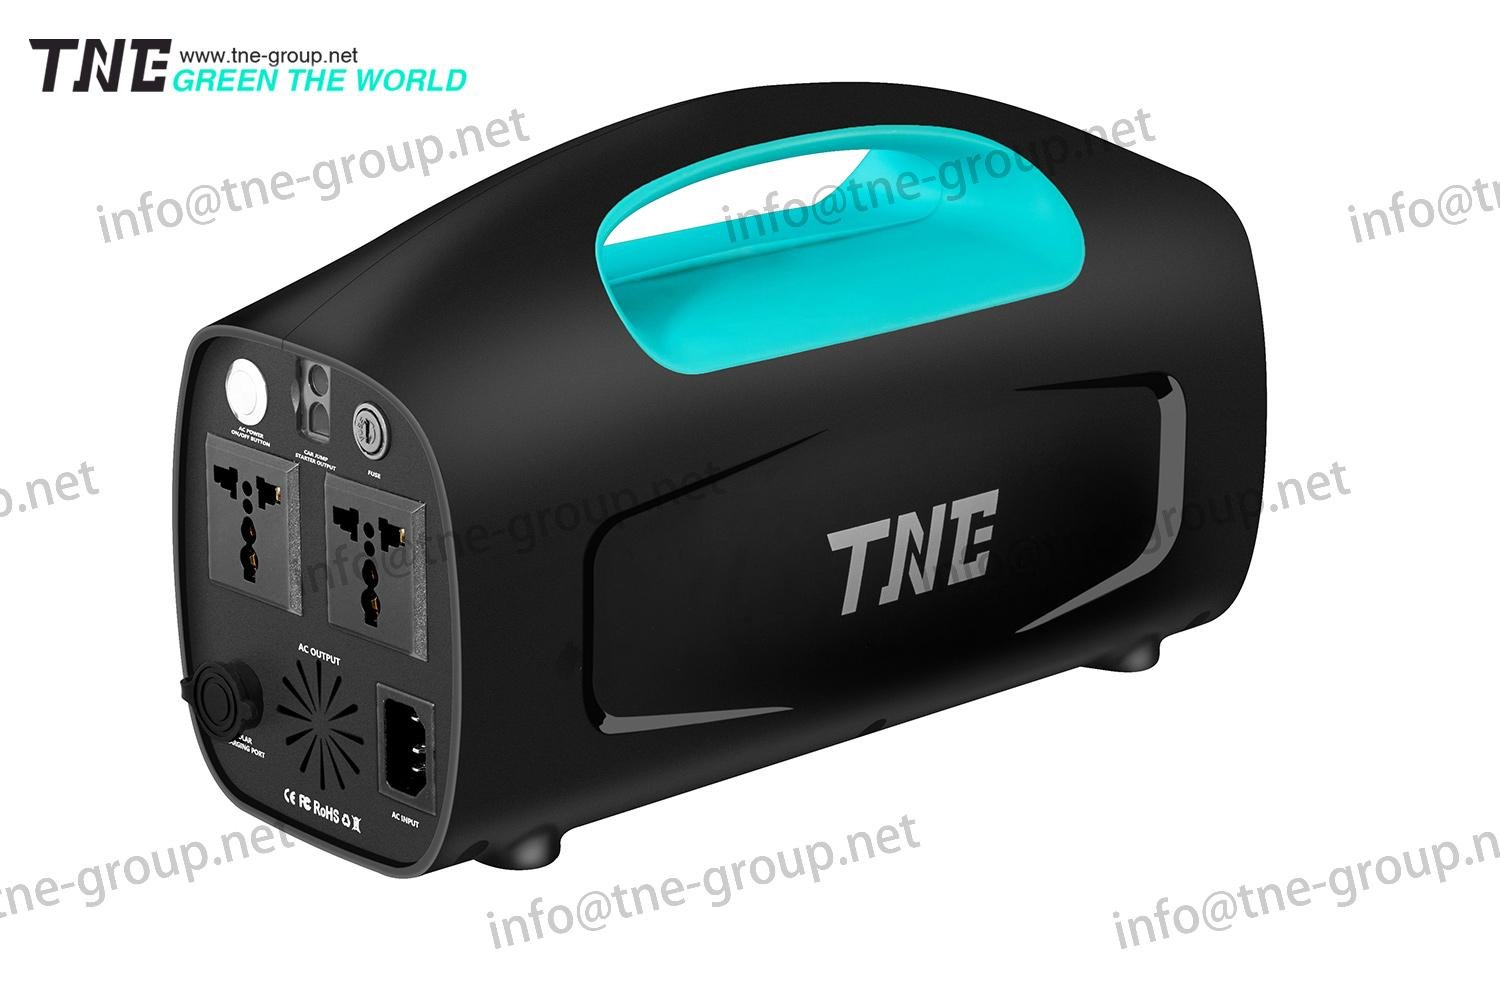 TNE smart solar online ups portable generator power bank 3